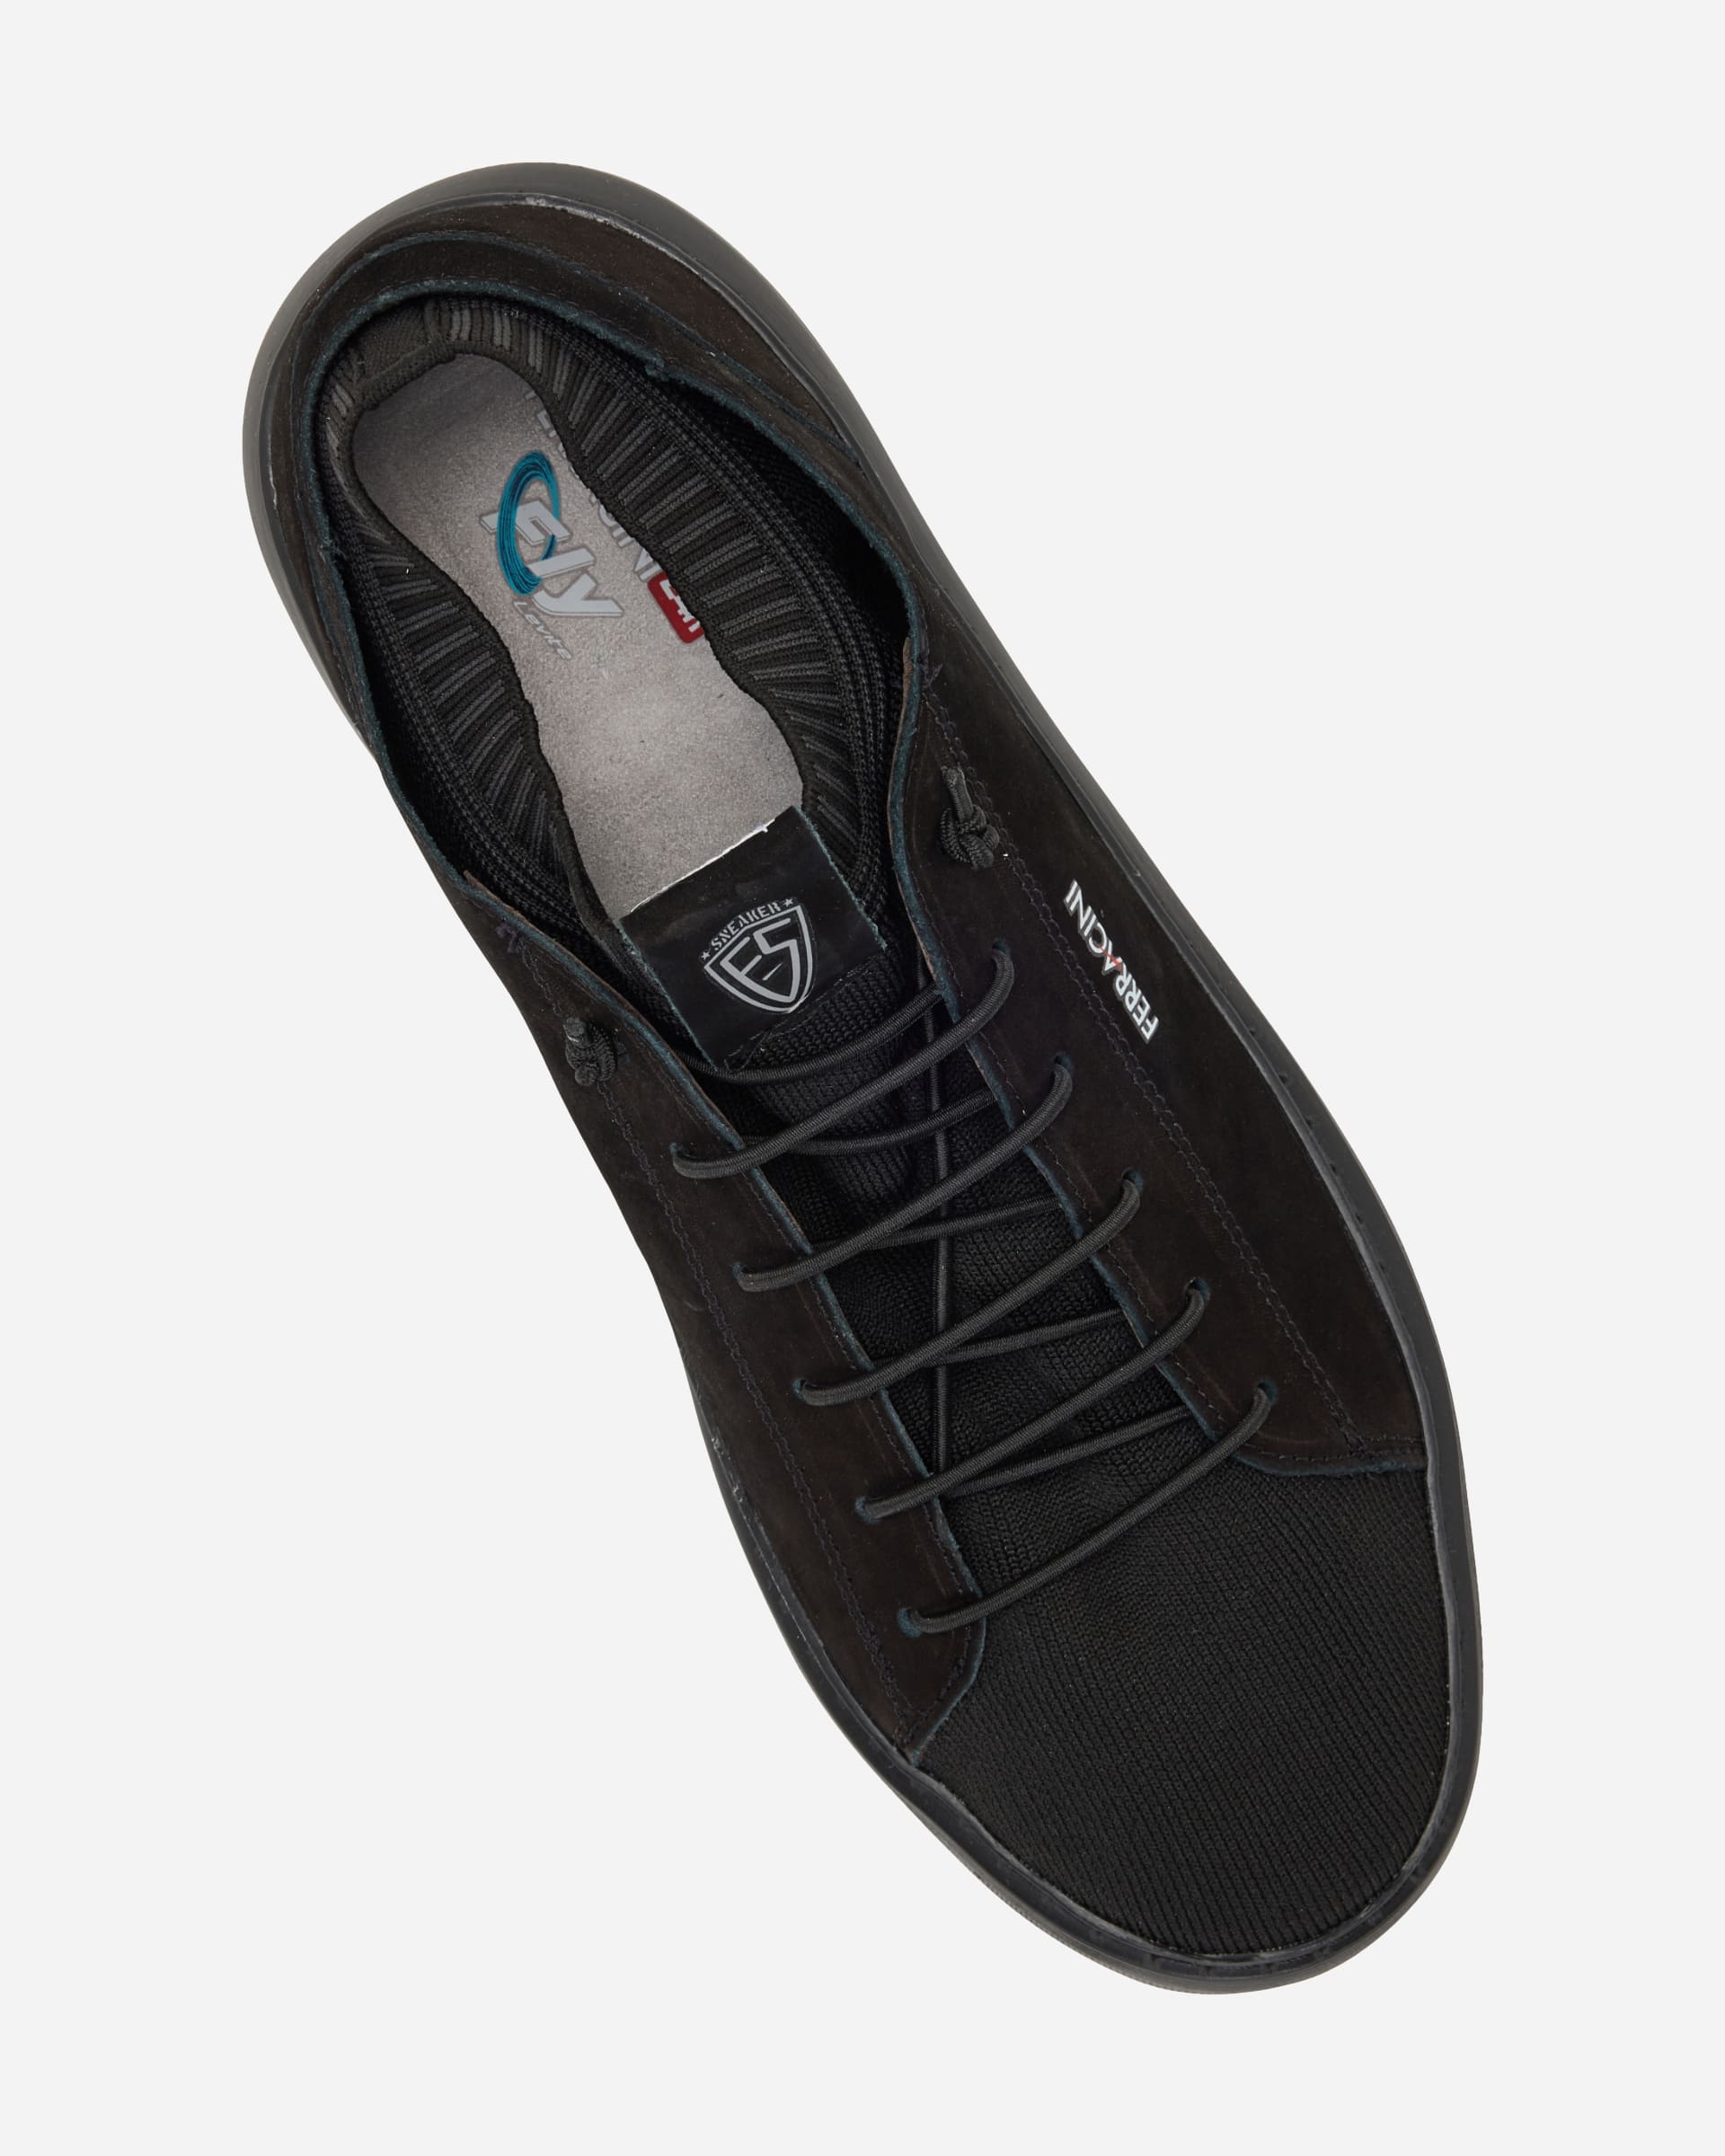 Xavion Black Sneaker - Men's Shoes at Menzclub